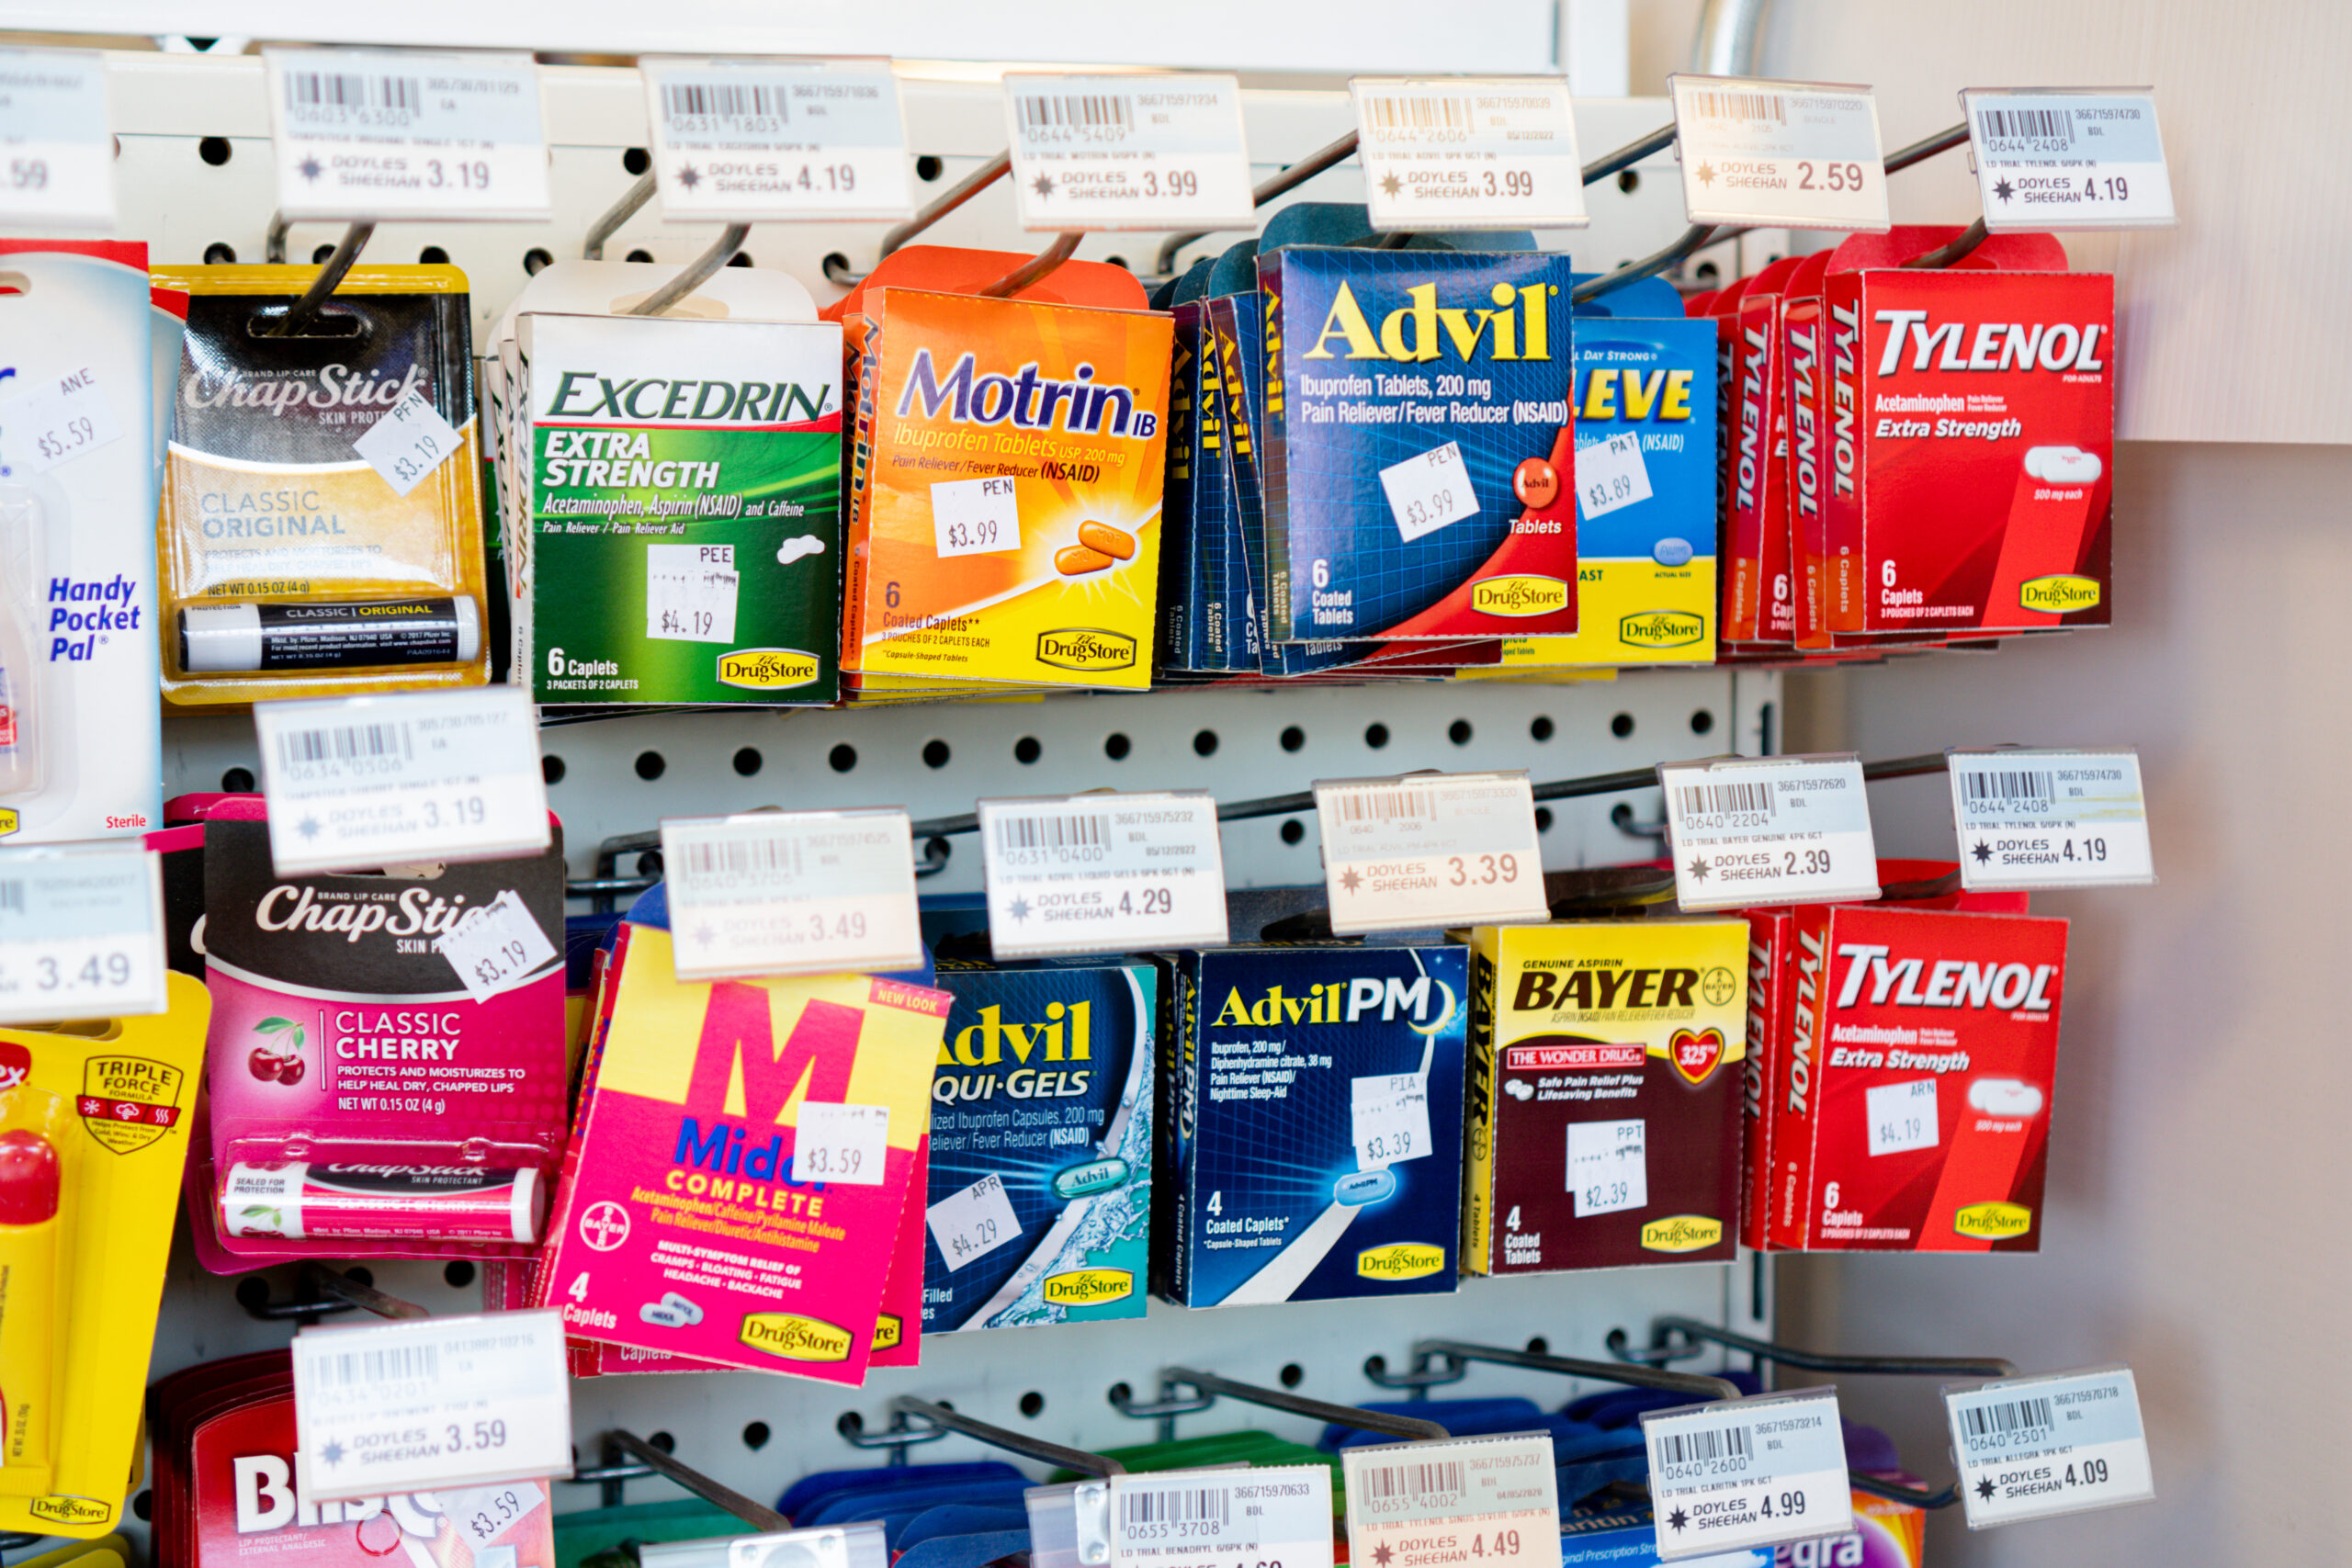 Advil, Tylenol, Motrin, Chapstick, & other similar products